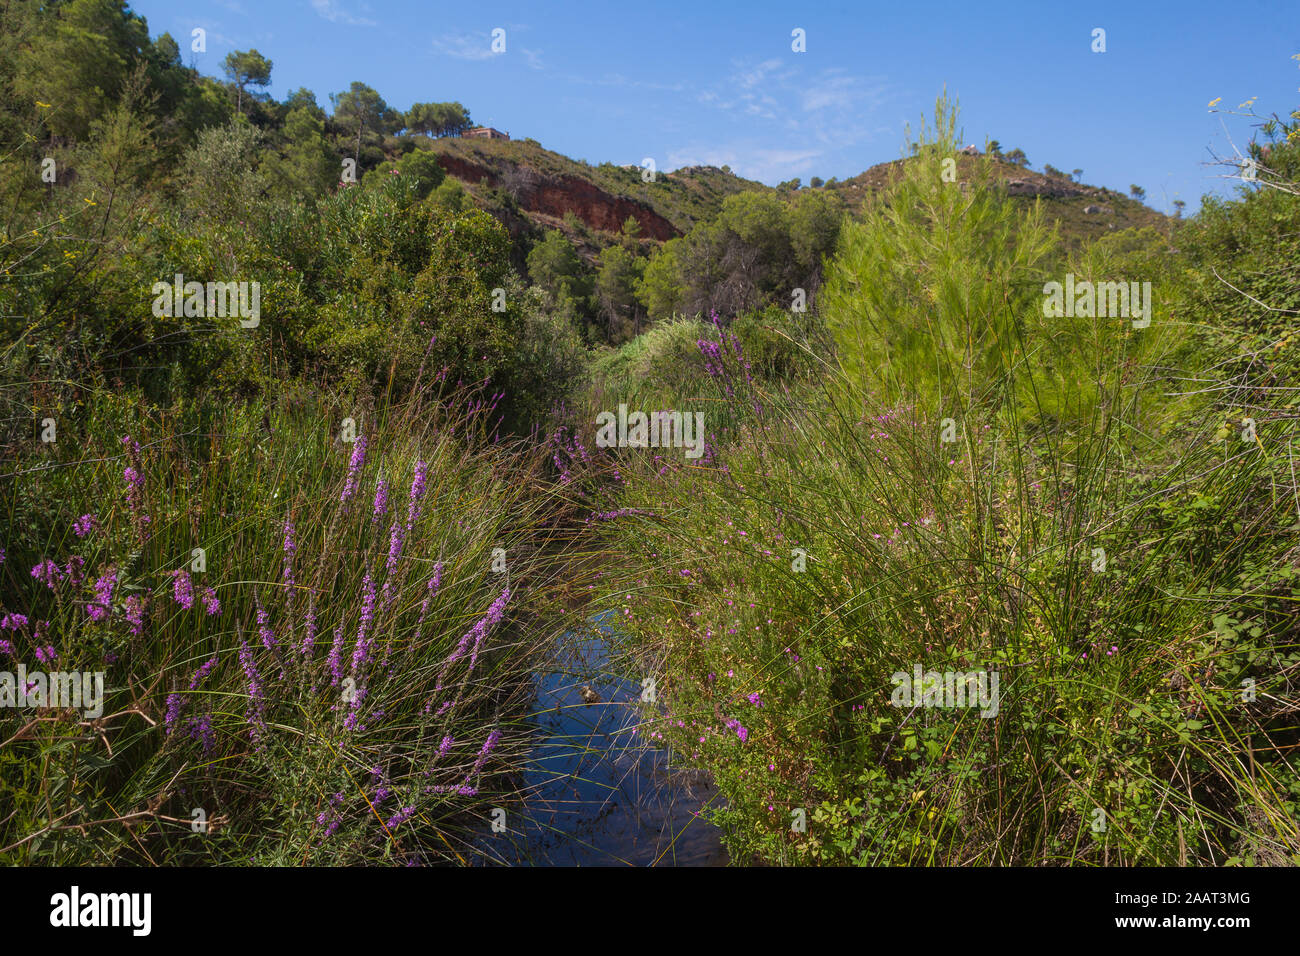 Creek tra vegetazione mediterranea con cespugli e piante di lavanda in campagna in Spagna, Europa Foto Stock